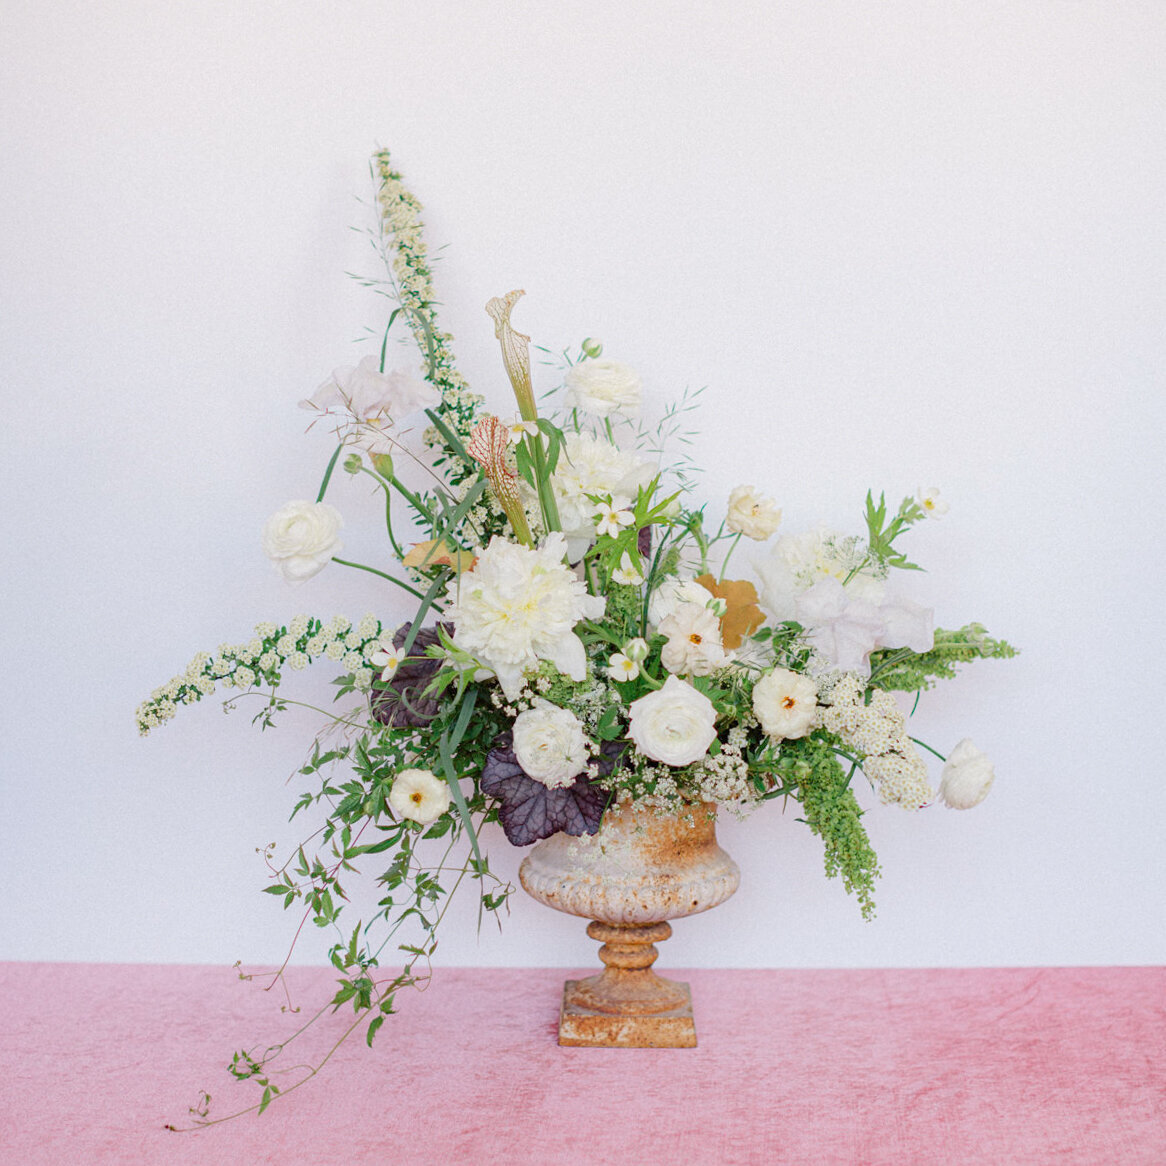 Atelier-Carmel-Wedding-Florist-GALLERY-Arrangements-9